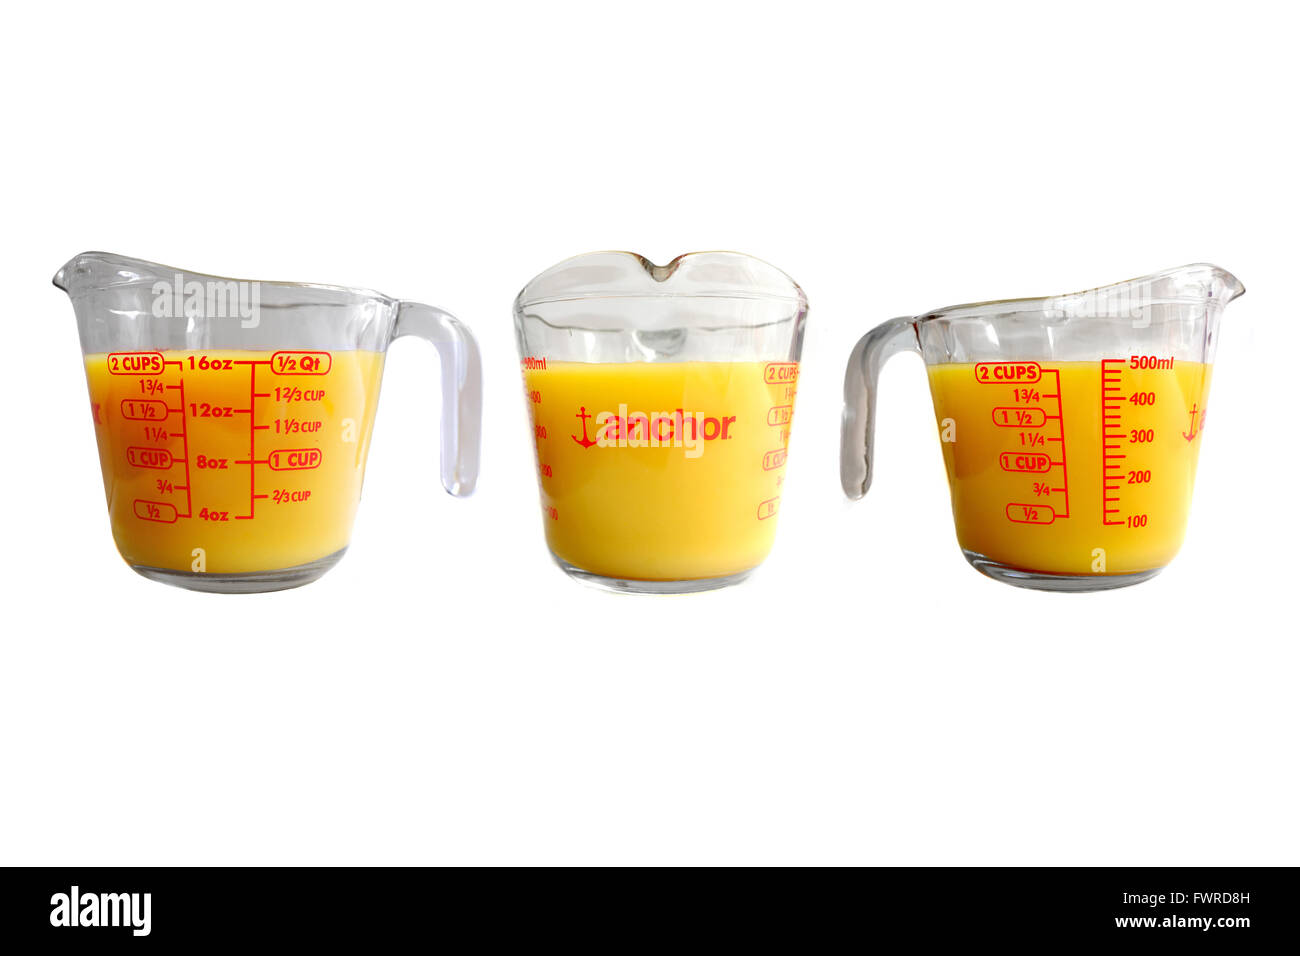 https://c8.alamy.com/comp/FWRD8H/three-sides-of-an-anchor-jug-full-of-yellow-liquid-photographed-against-FWRD8H.jpg